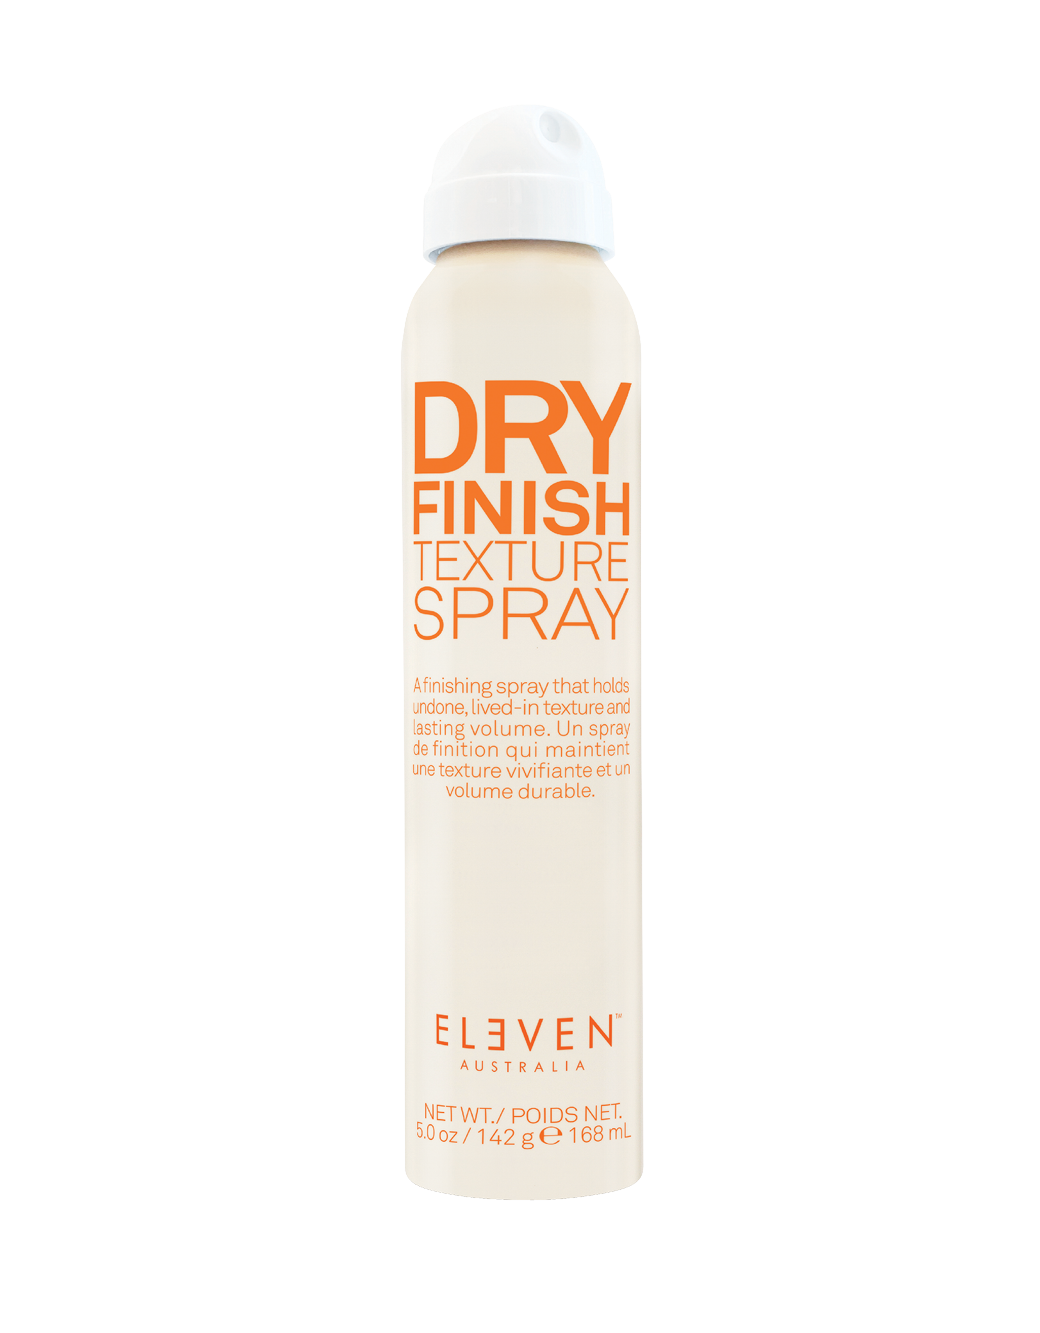 Dry Finish Texture Spray 178ml